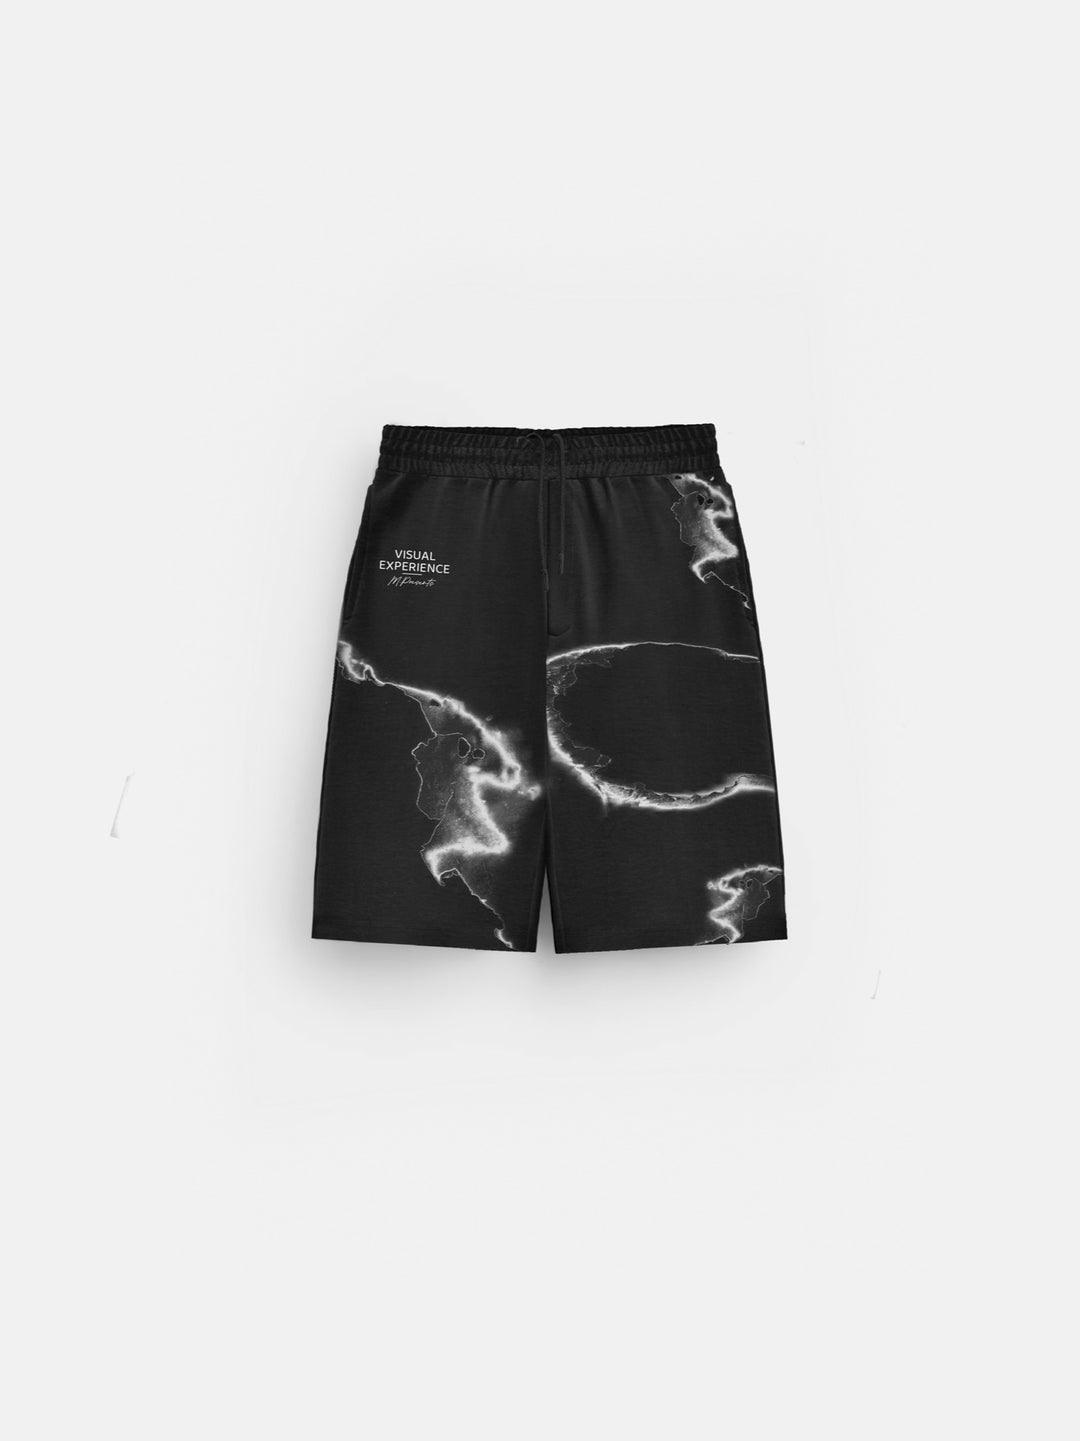 Oversize Burned Paper Shorts - Black and White